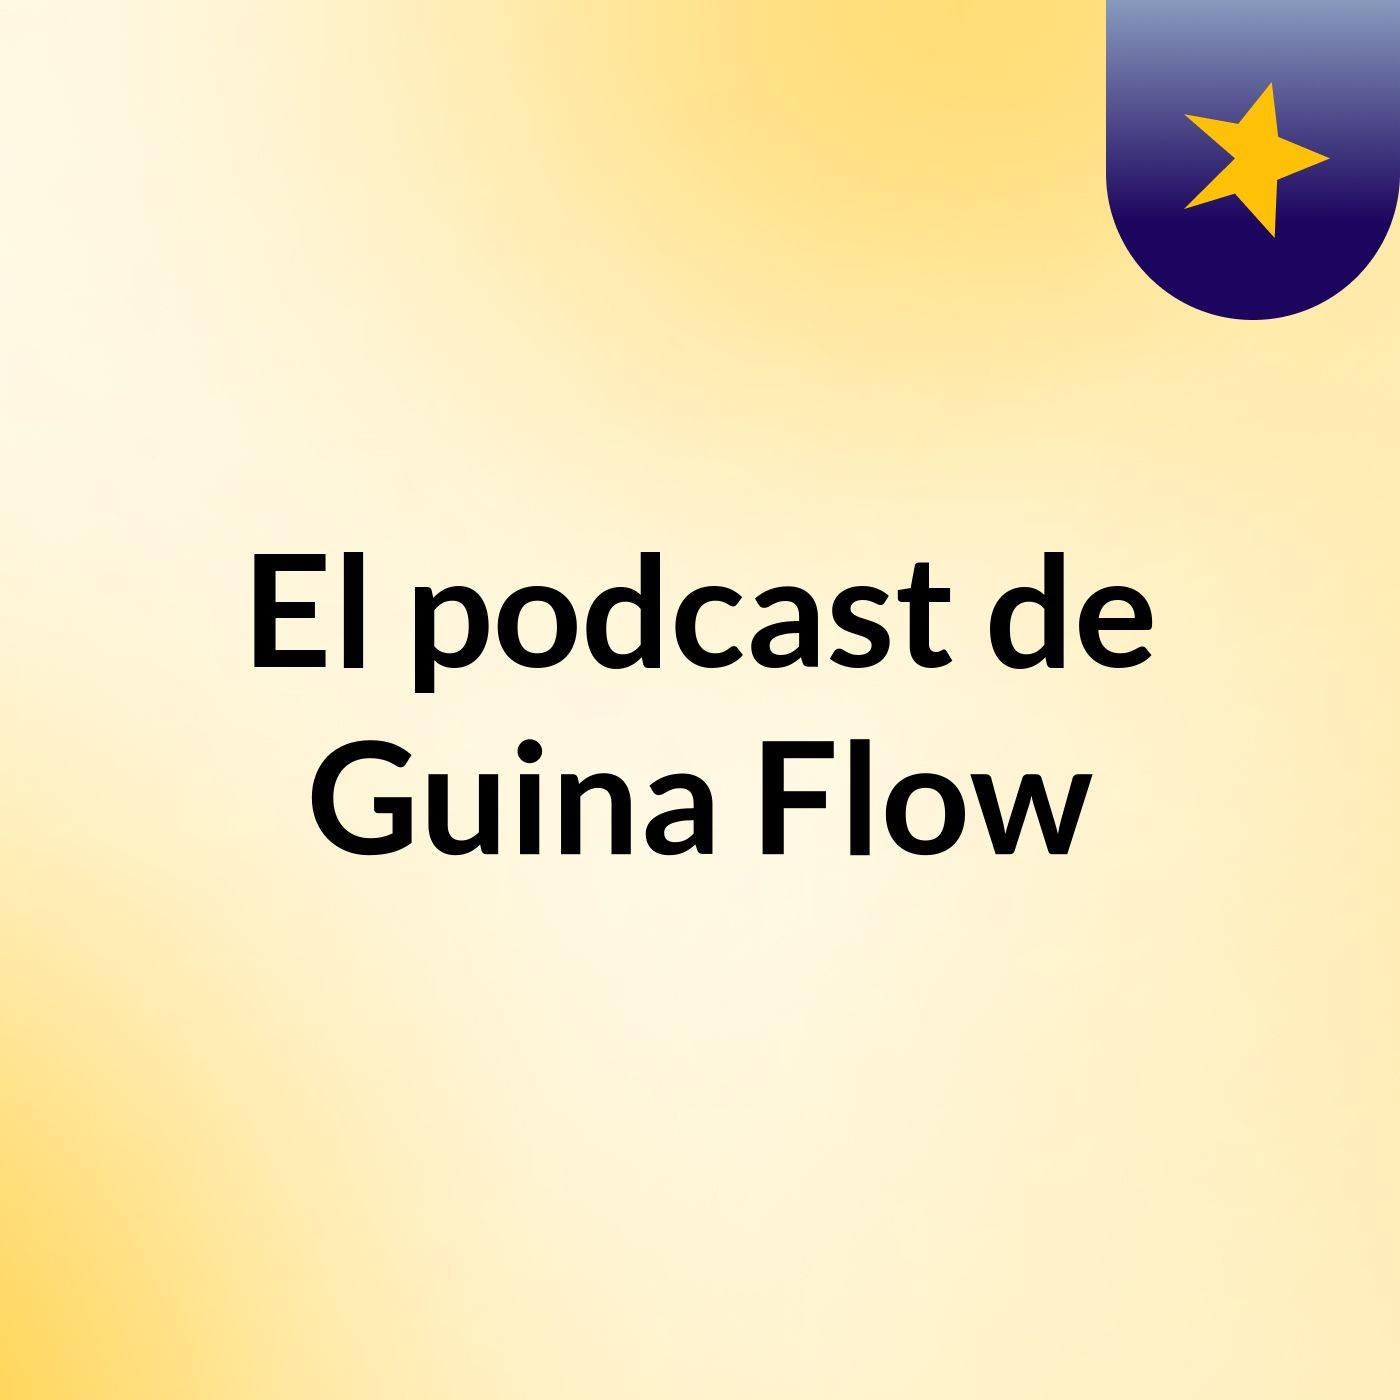 INTRODUCTION TO PROPOSITIONAL LOGIC - El podcast de Guina Flow